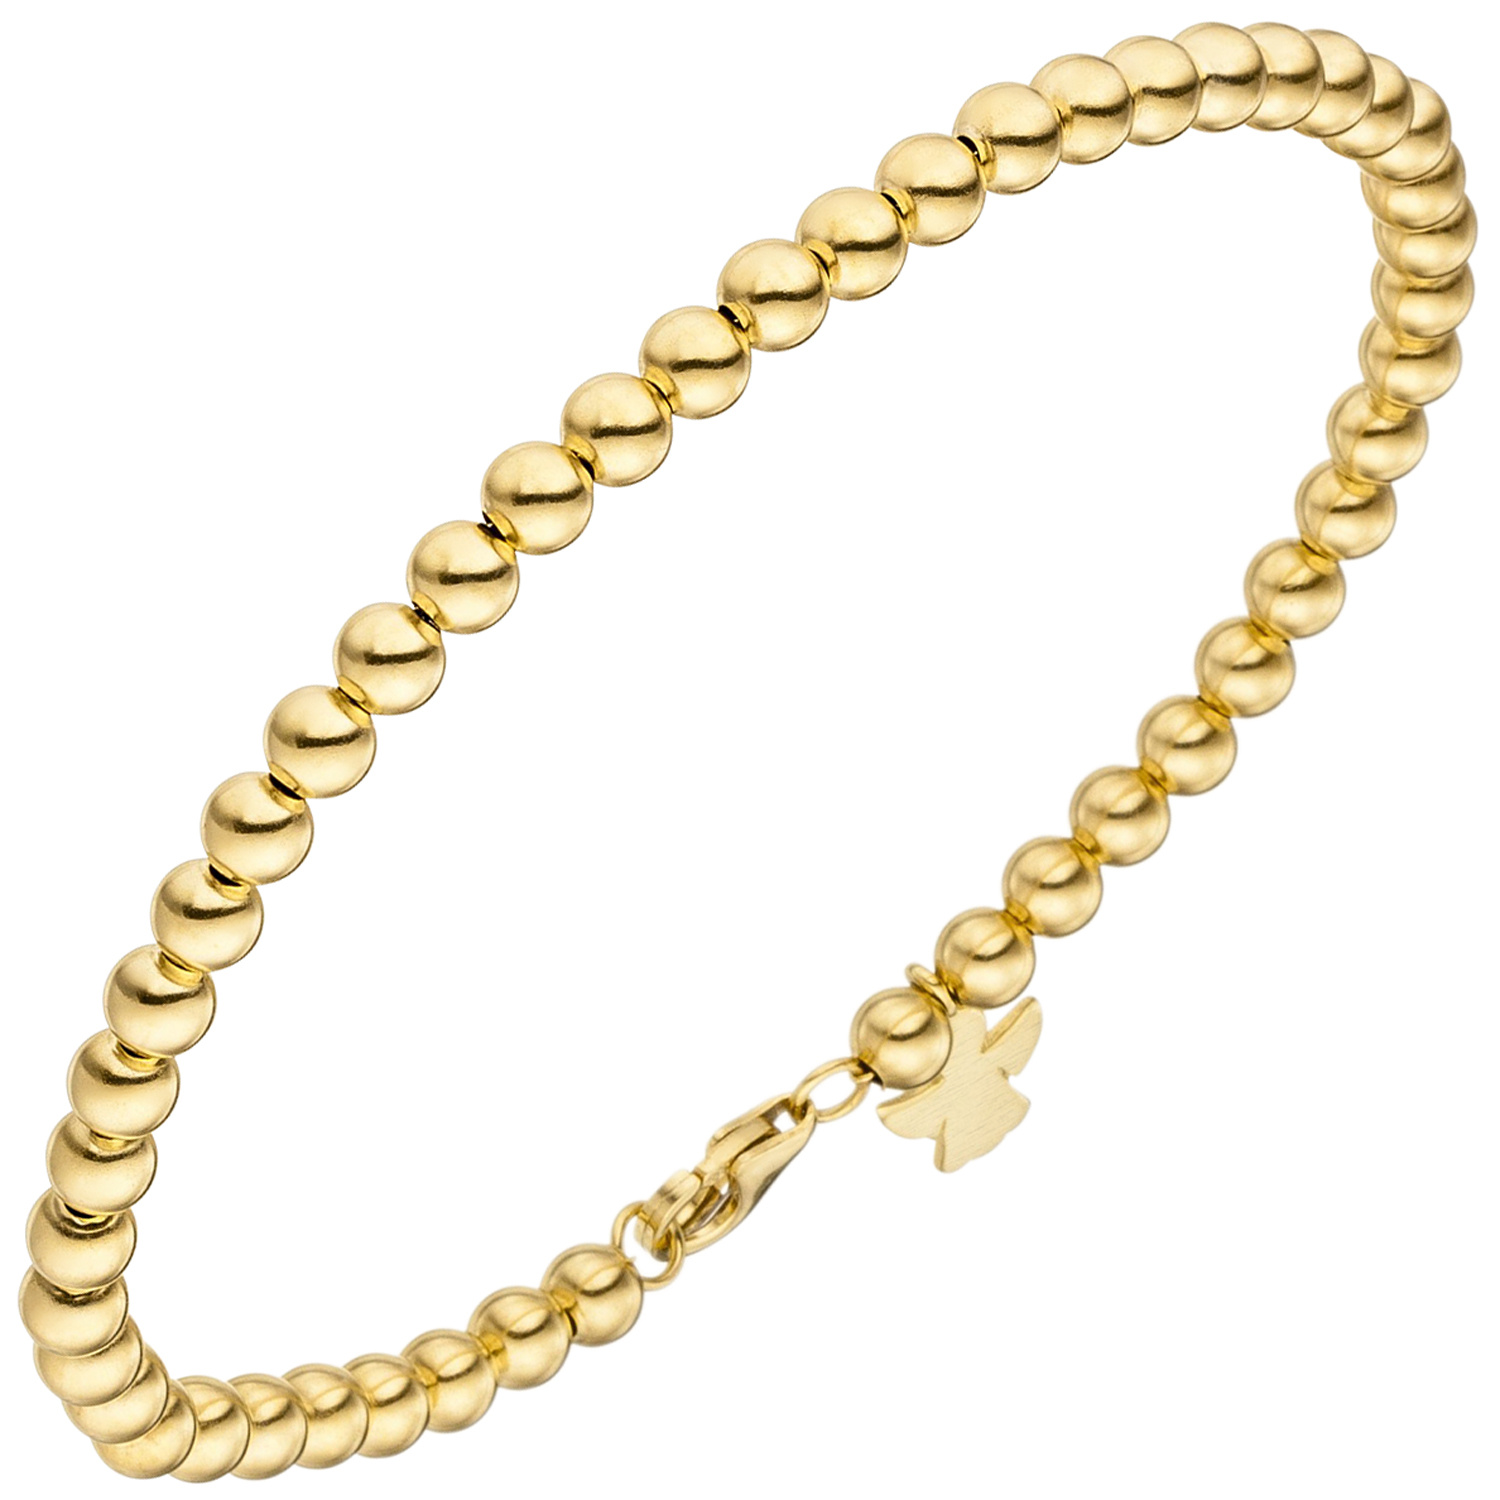 Traumringe24 - Armband mit Engel 585 Gold Gelbgold 19 cm Goldarmband  Schutzengel